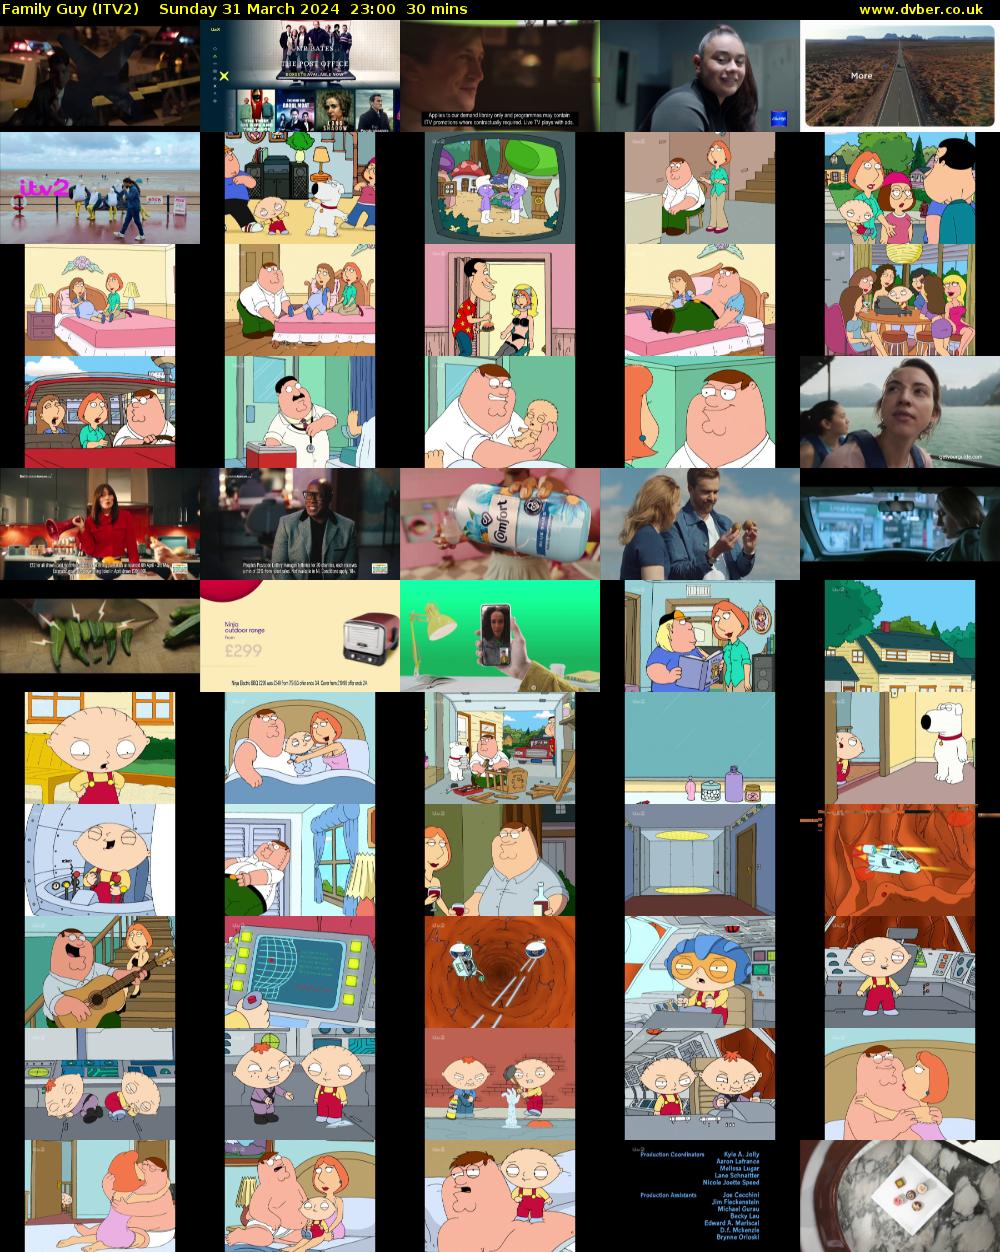 Family Guy (ITV2) Sunday 31 March 2024 23:00 - 23:30